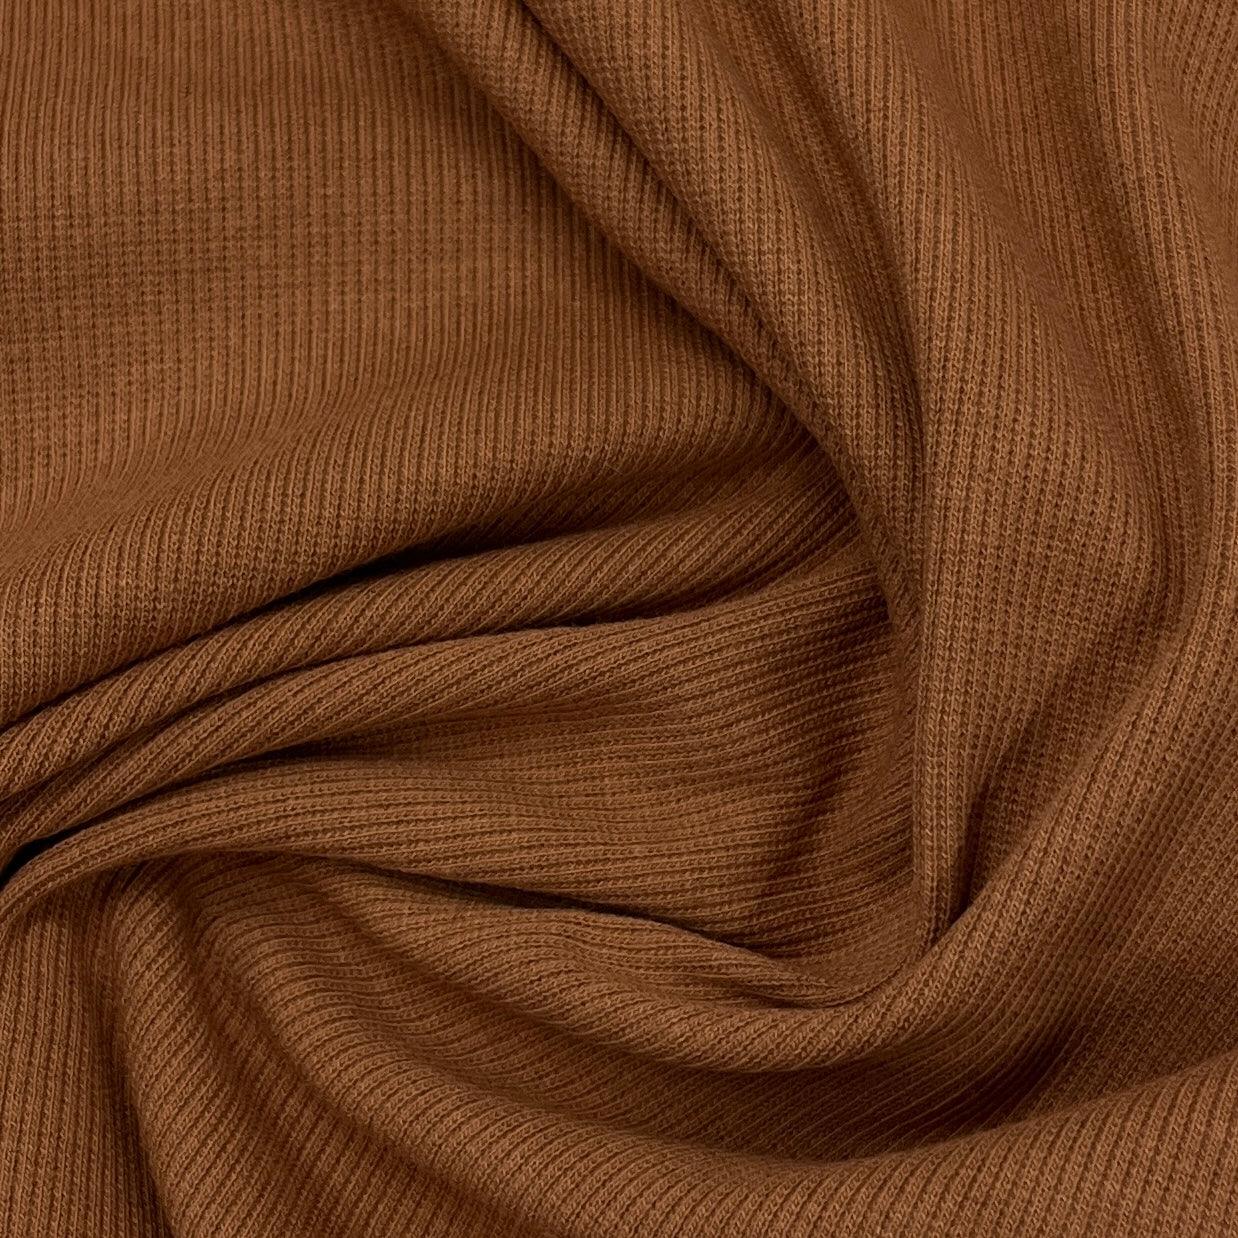 Rust 2x2 Organic Cotton Rib Knit Fabric - Nature's Fabrics